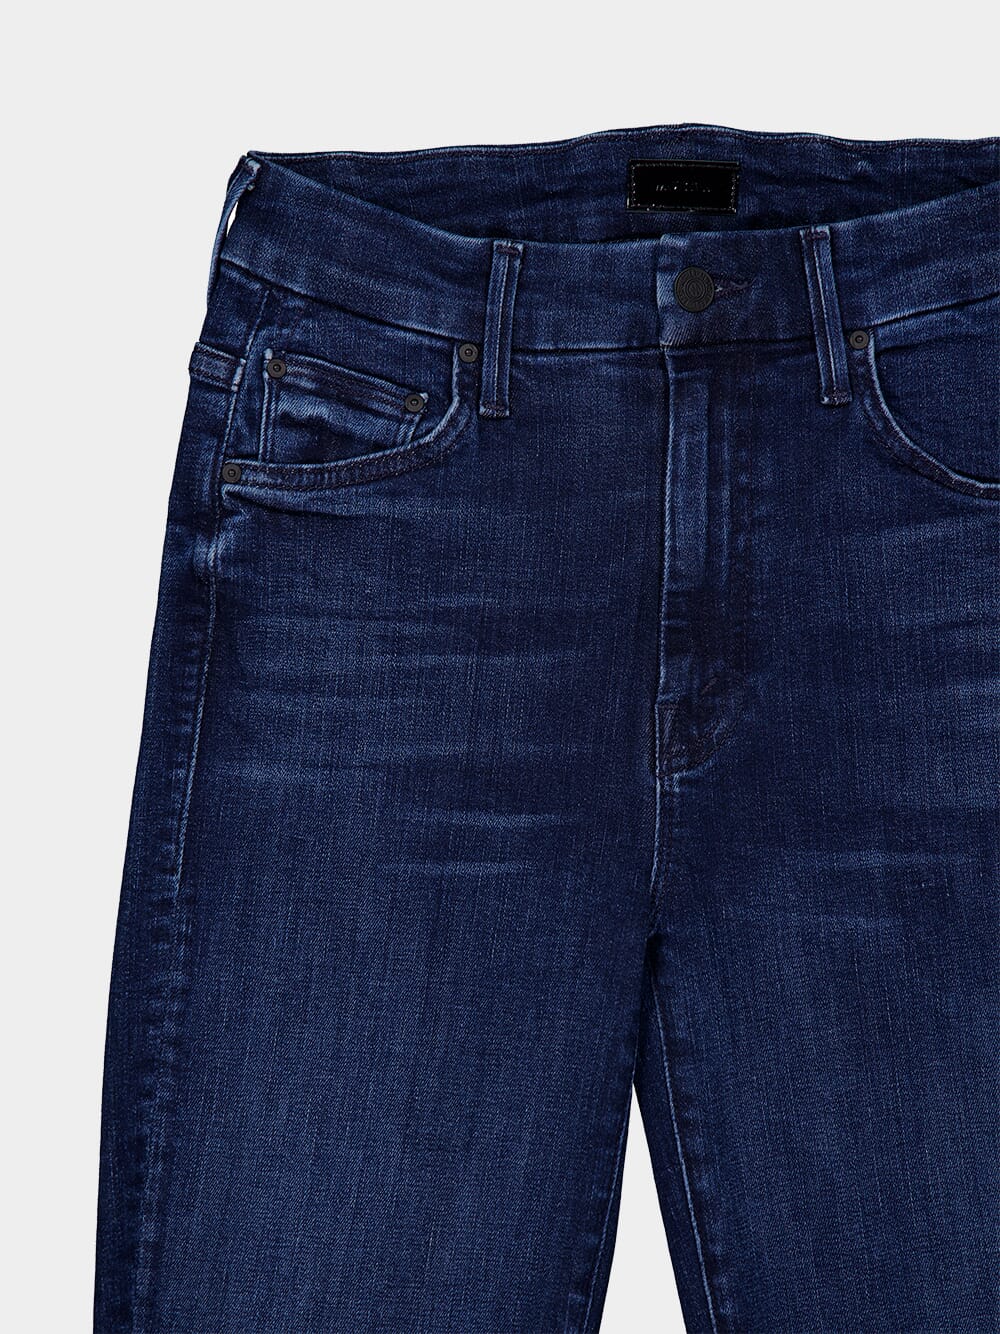 Dark Blue High-Waisted Looker Jeans